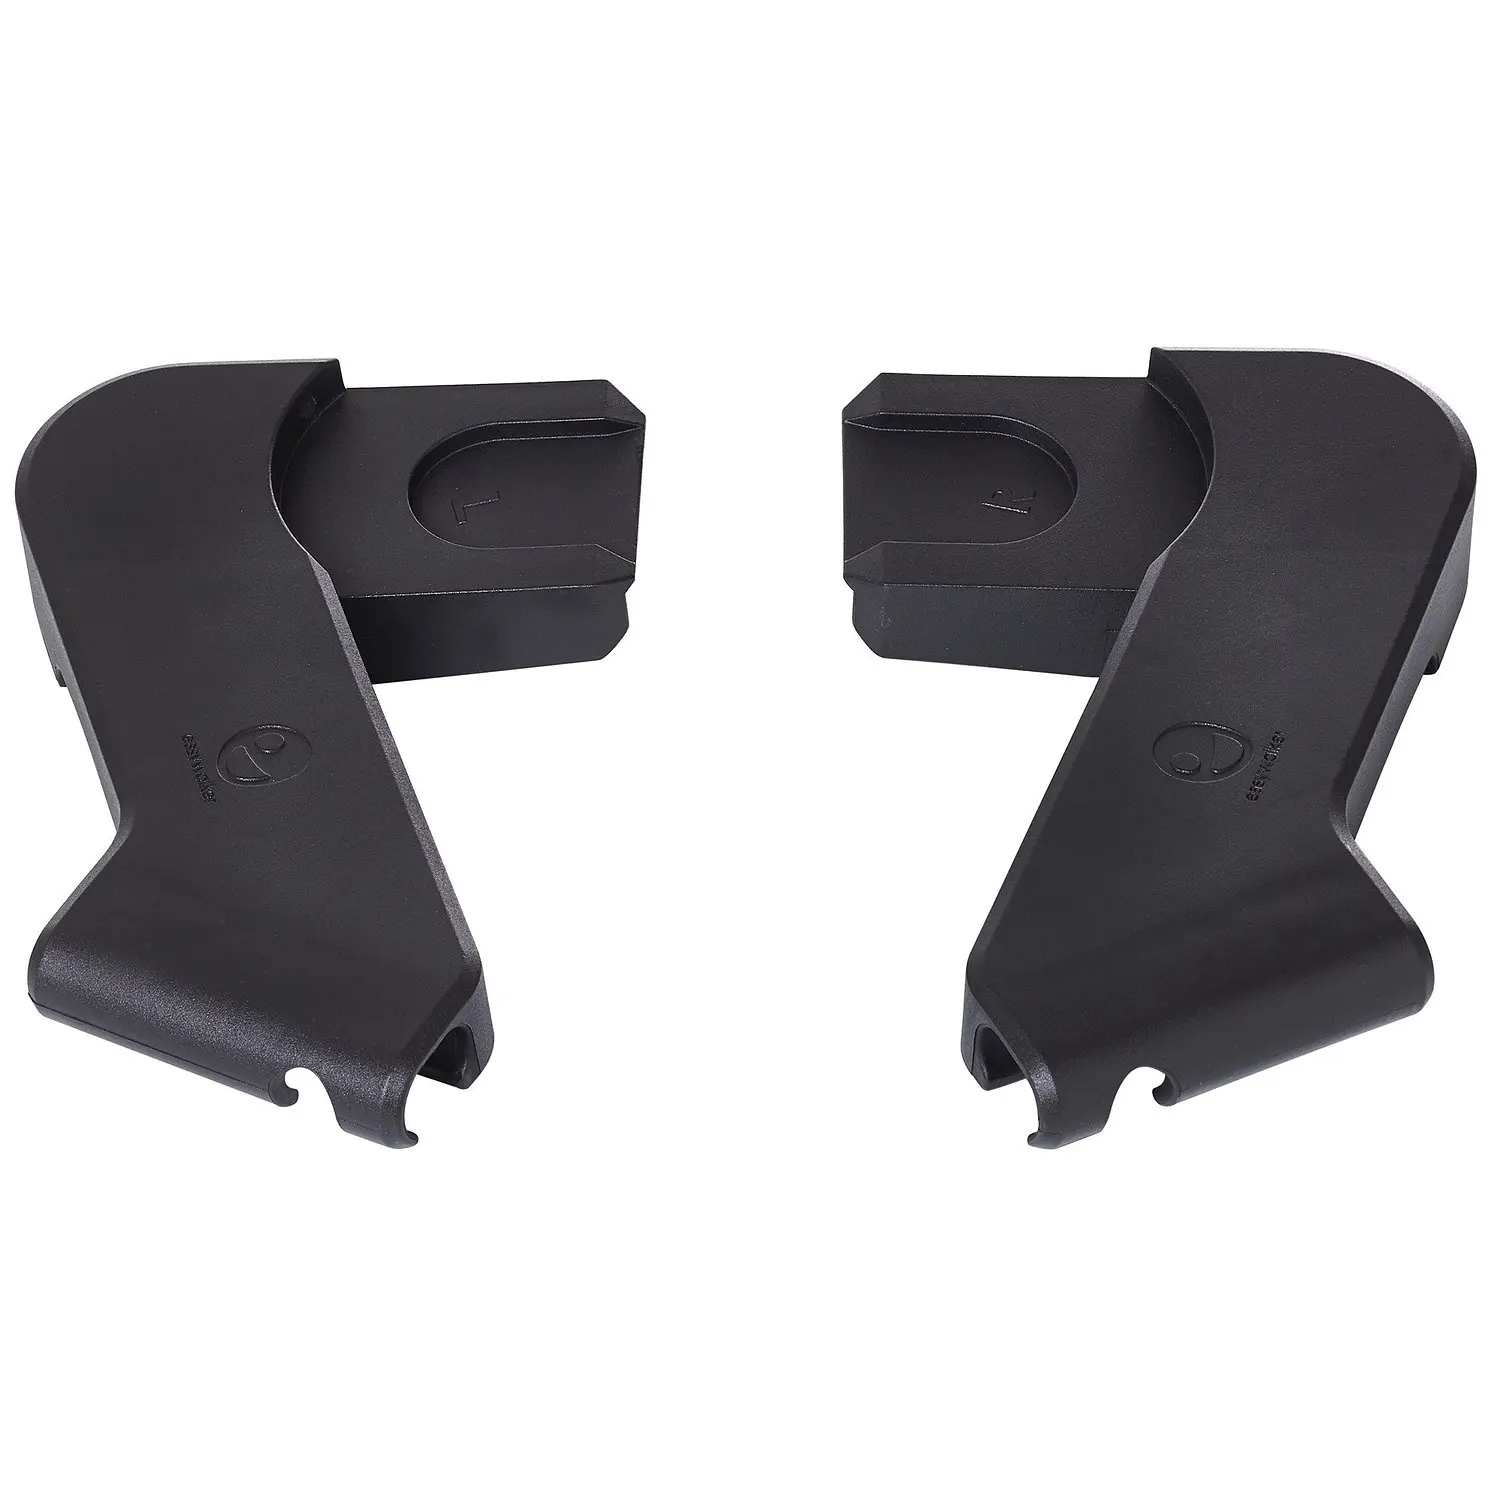 viool Stoel rotatie Adapter easywalker buggy car seat adapters|Car Seat Adapters| - AliExpress